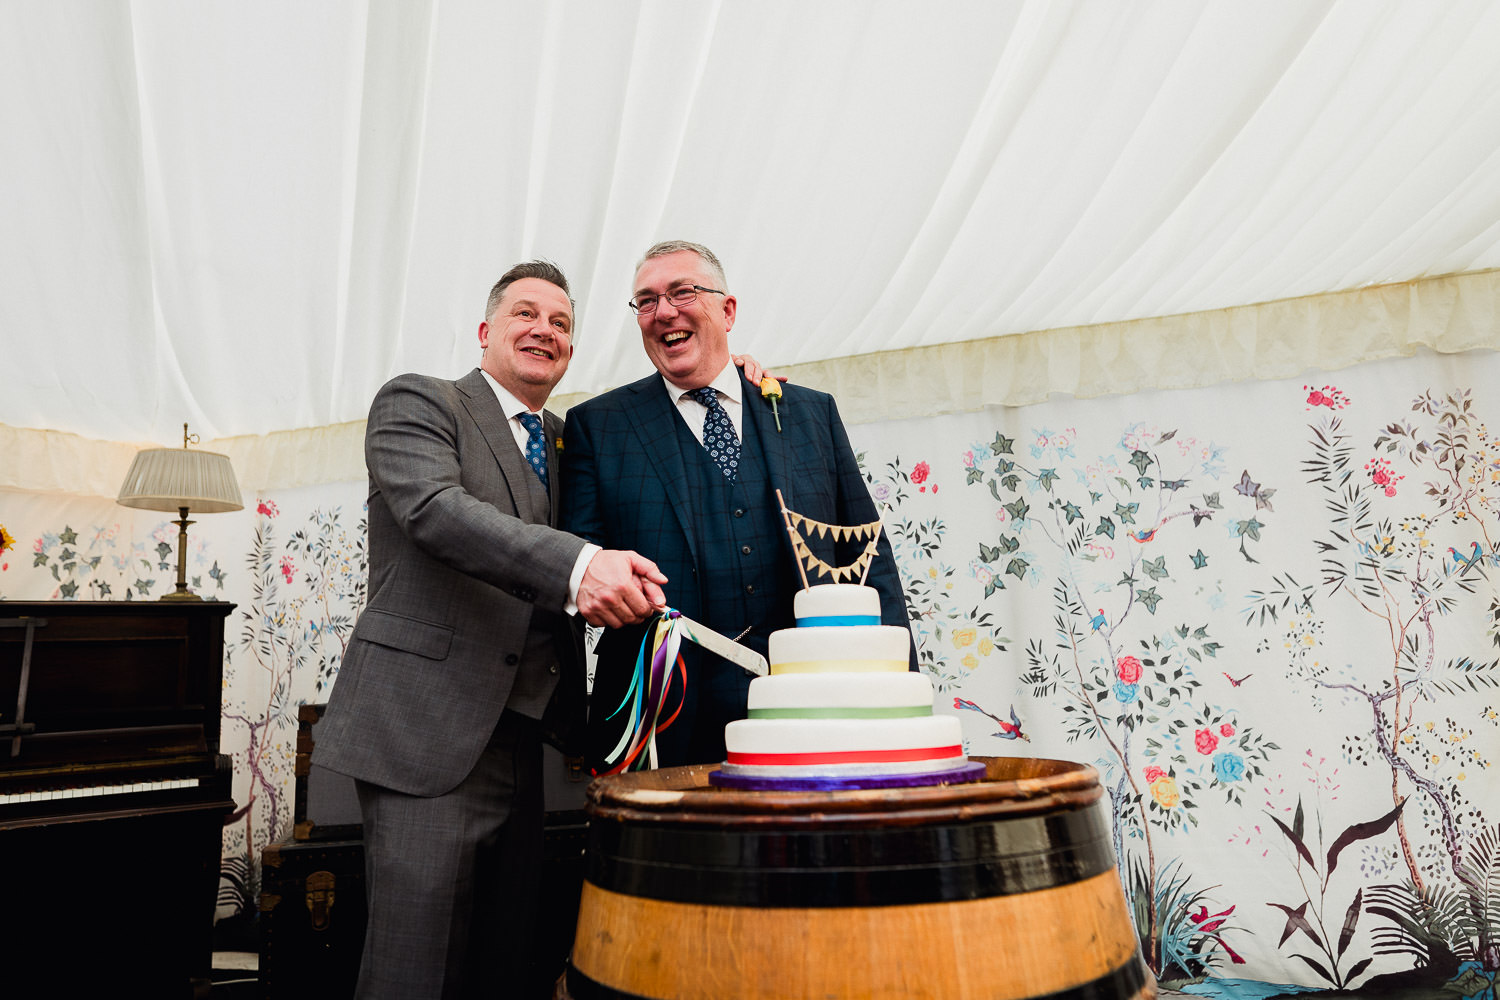 groom and groom cutting wedding cake